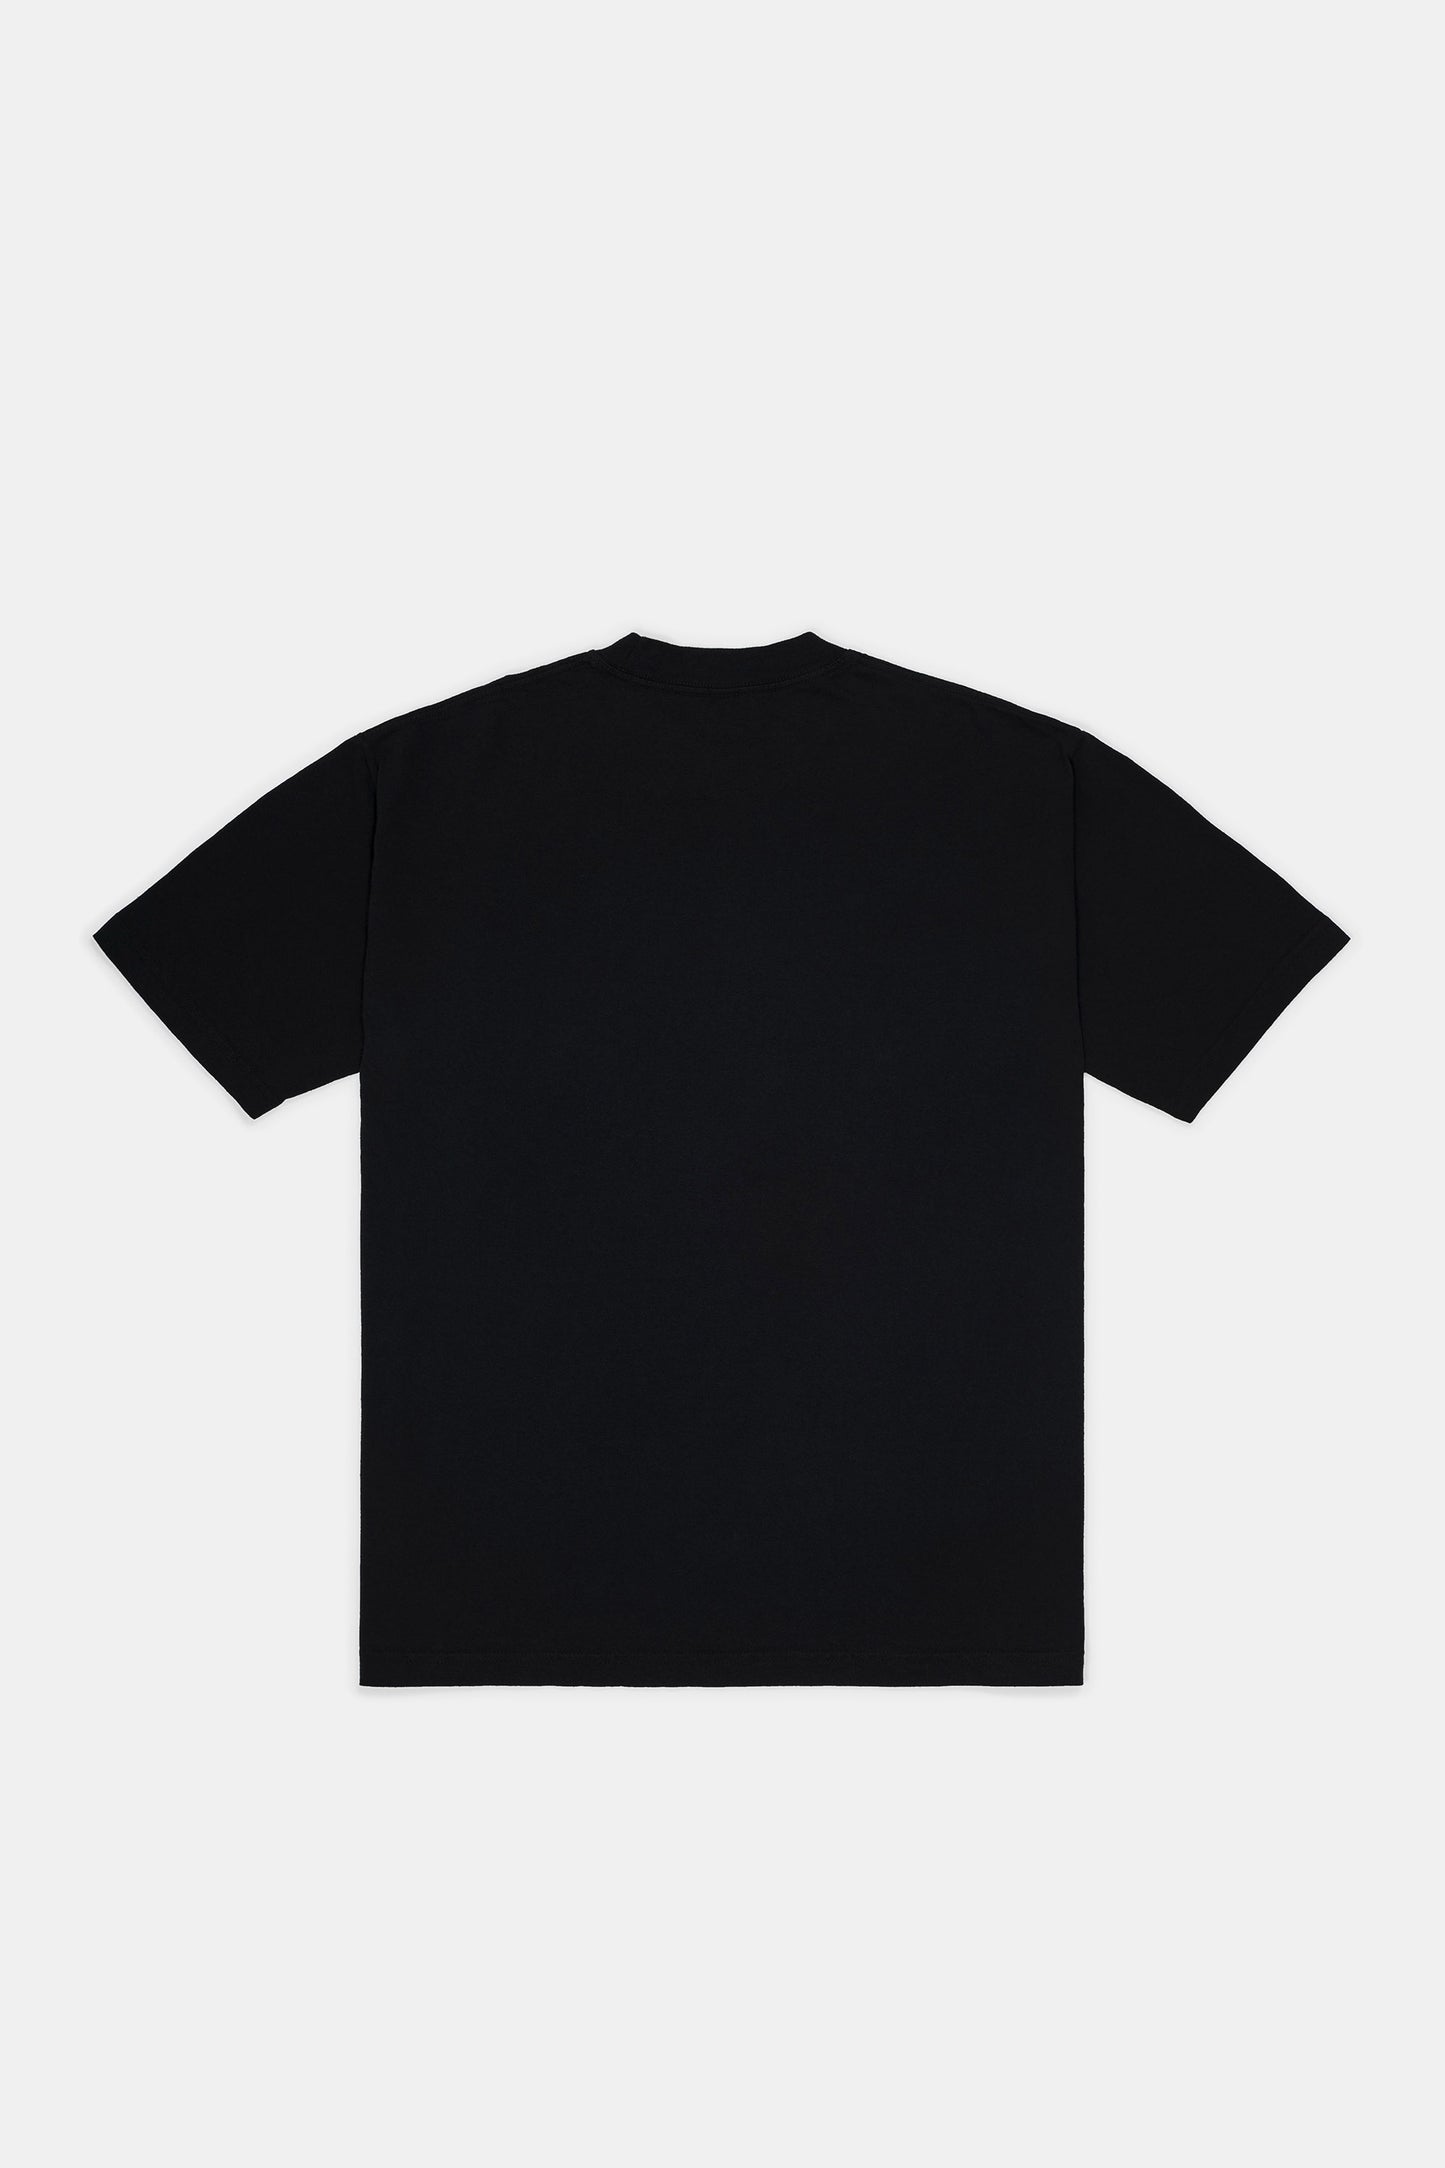 Demon Compass T-shirt / Black – Provoker Official Merchandise